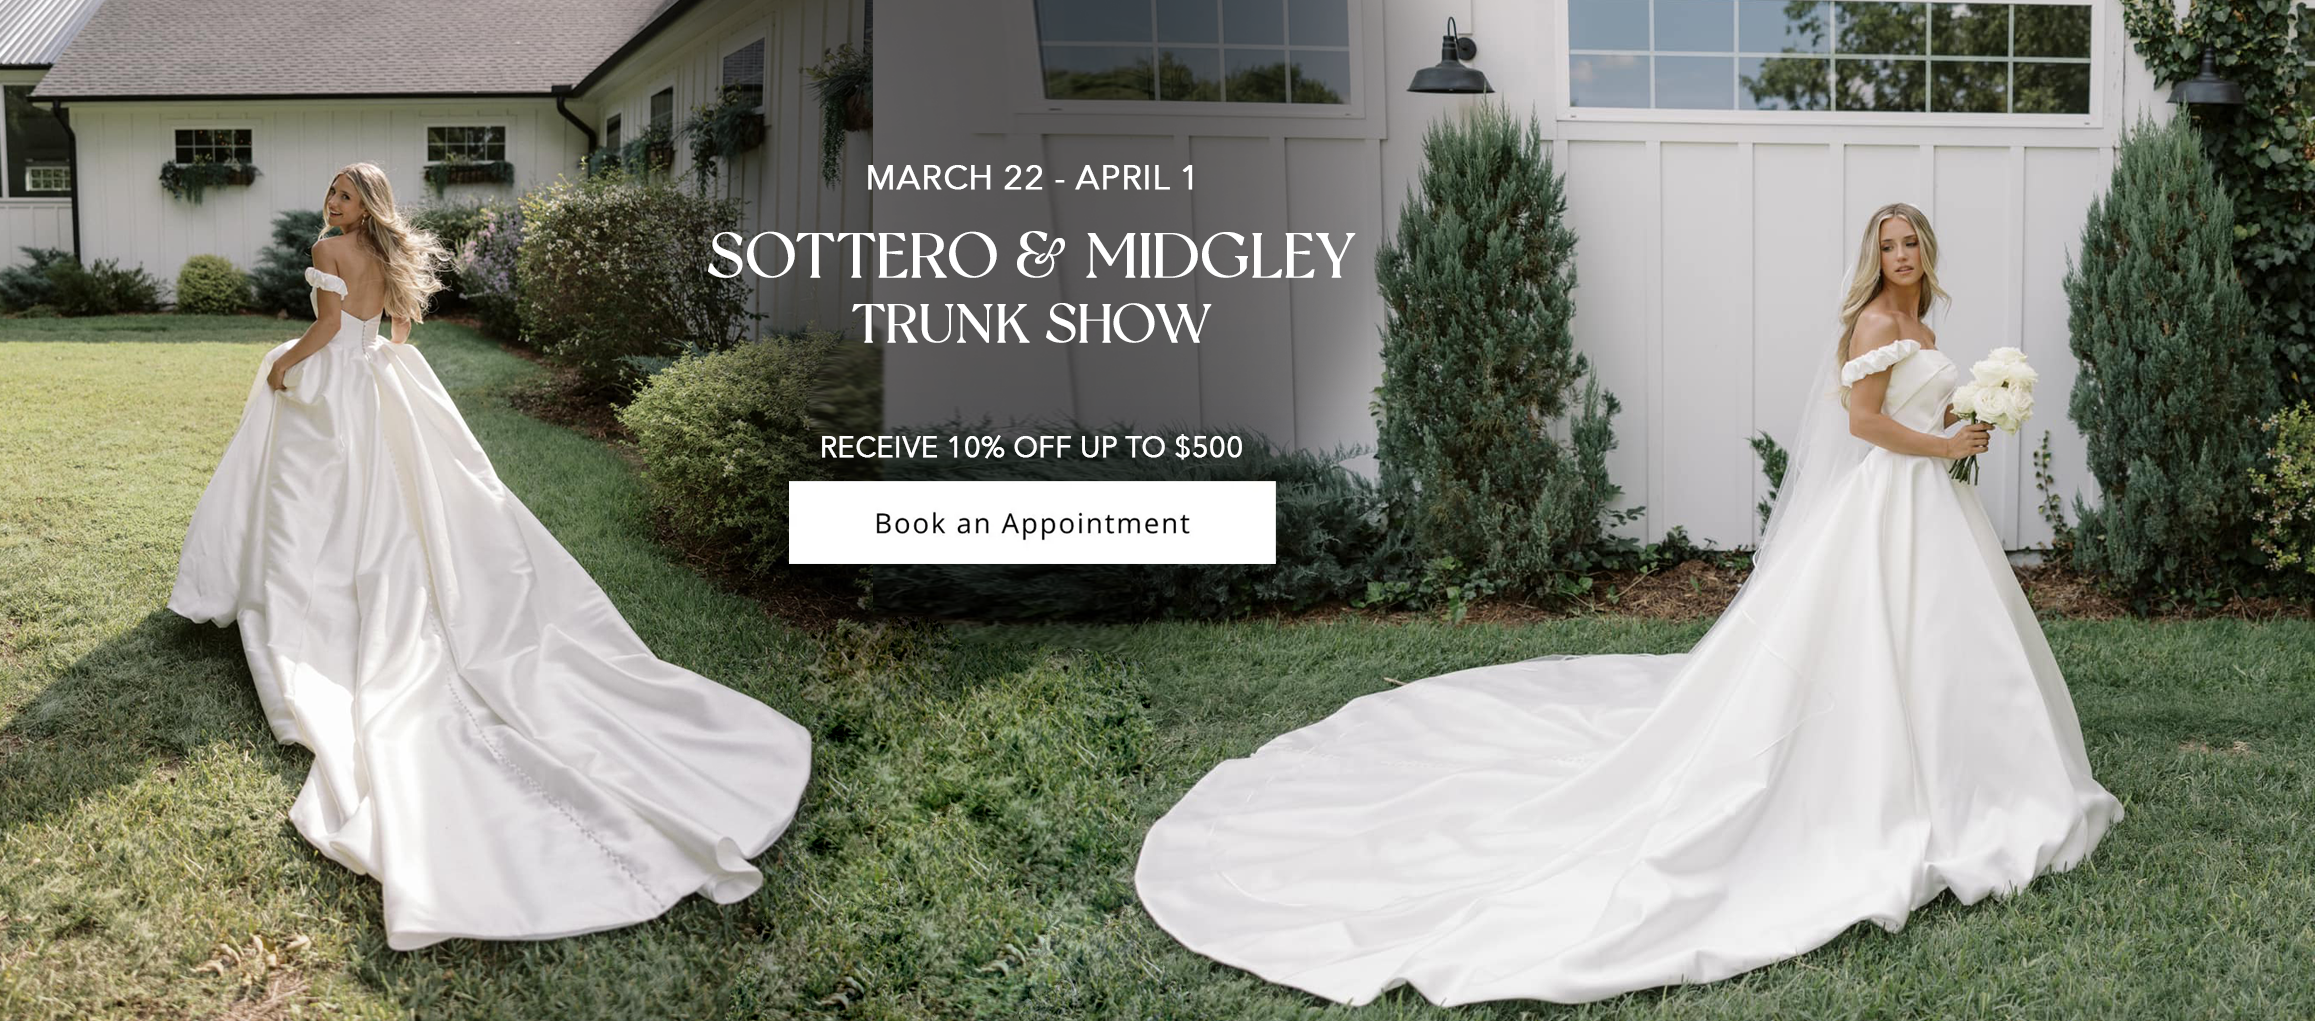 Sottero & Midgley Trunk Show 3/22 - 4/1